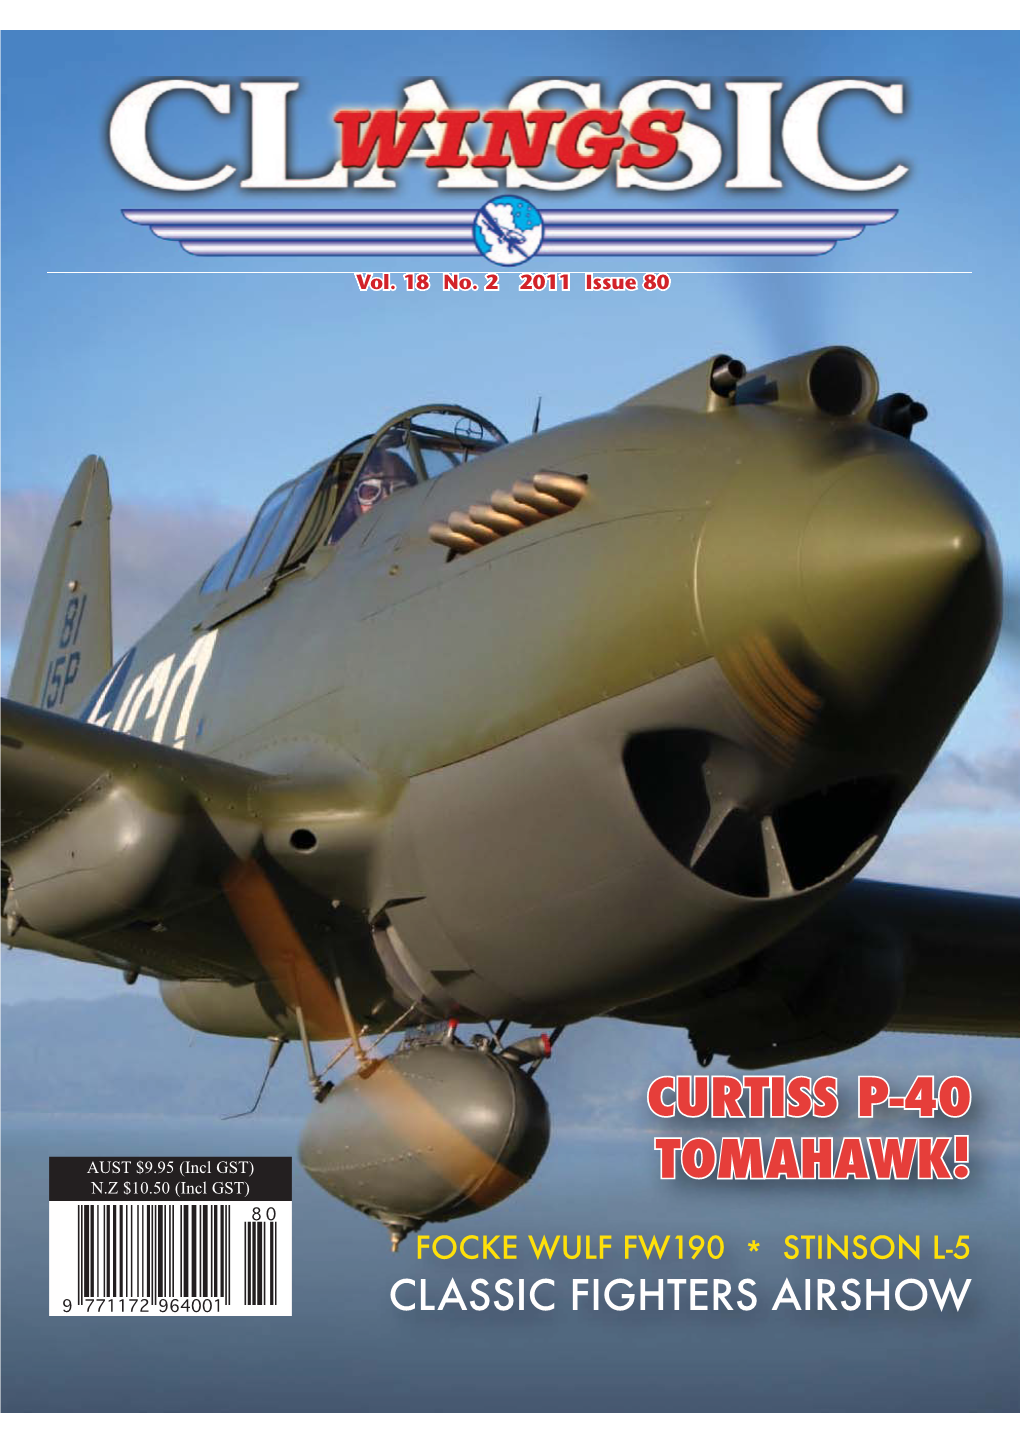 Curtiss P-40 Tomahawk!